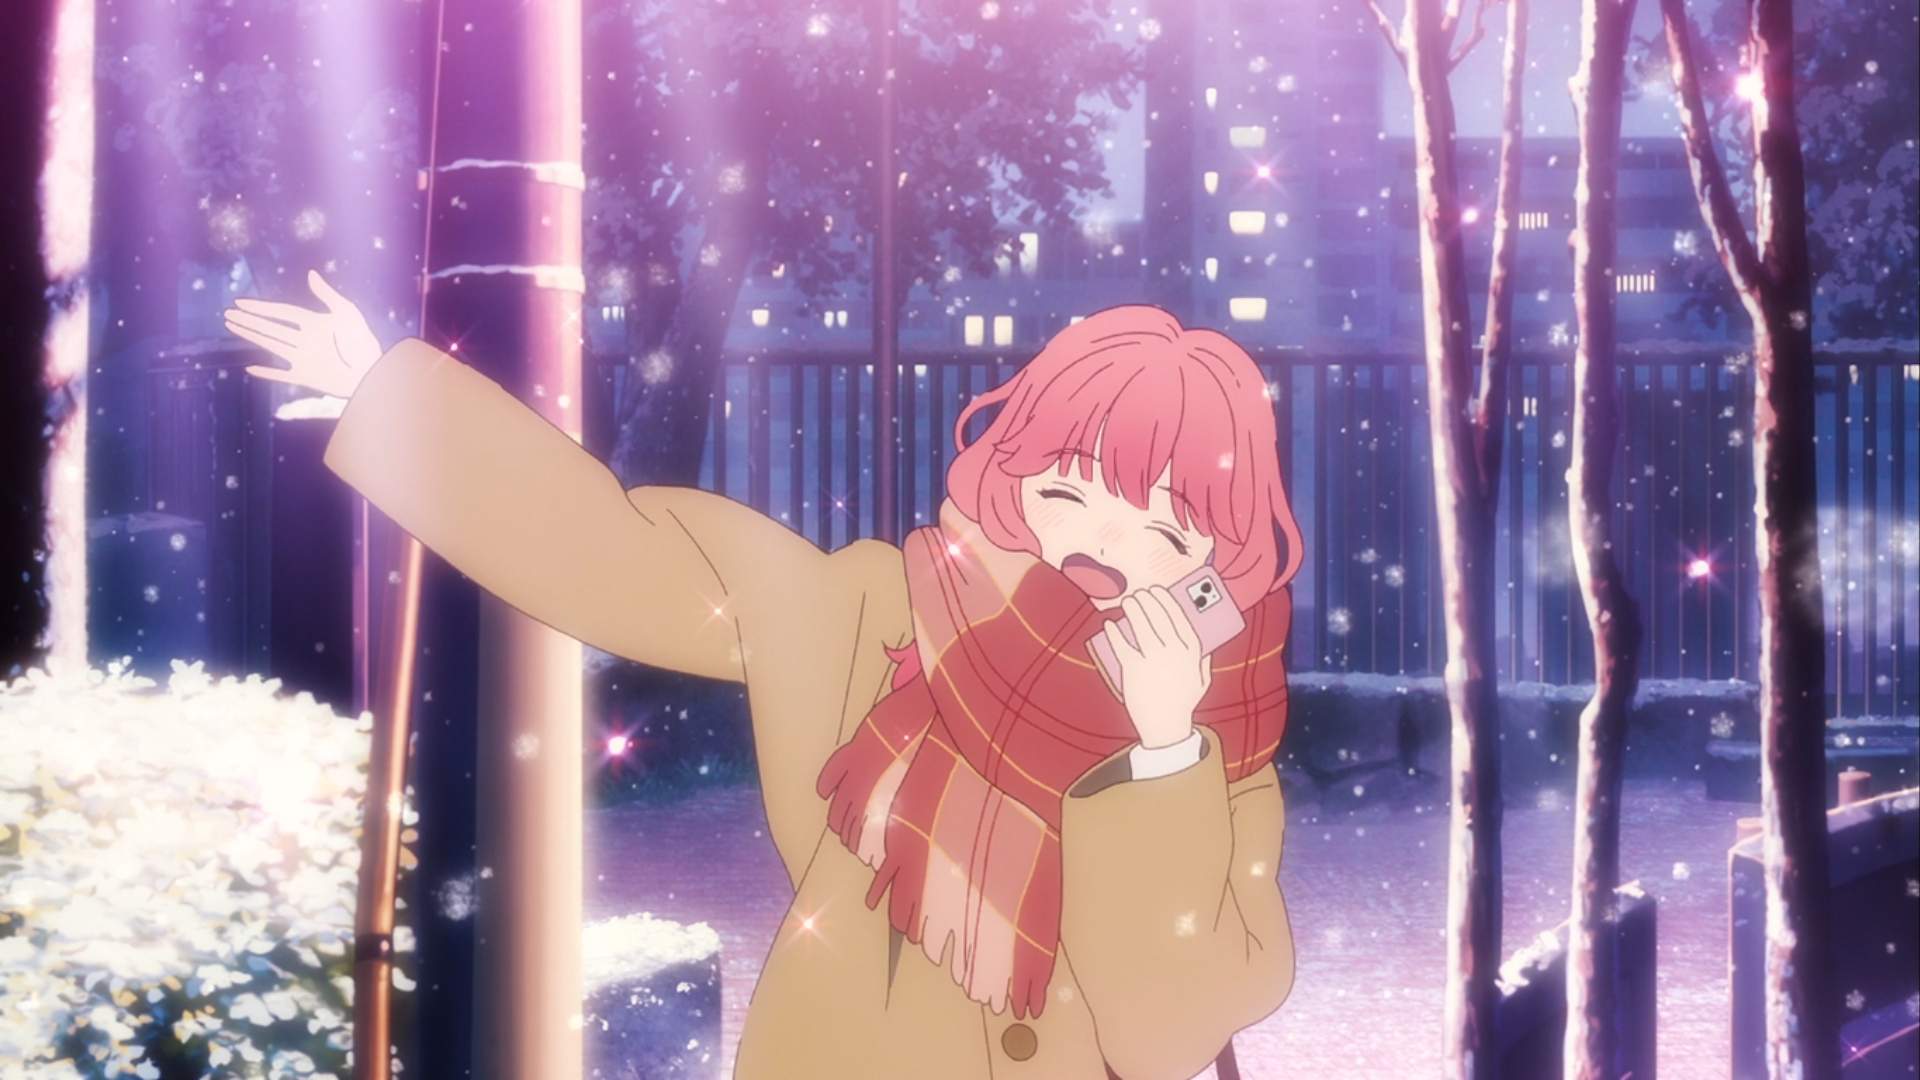 Yuki waving A Sign Of Affection